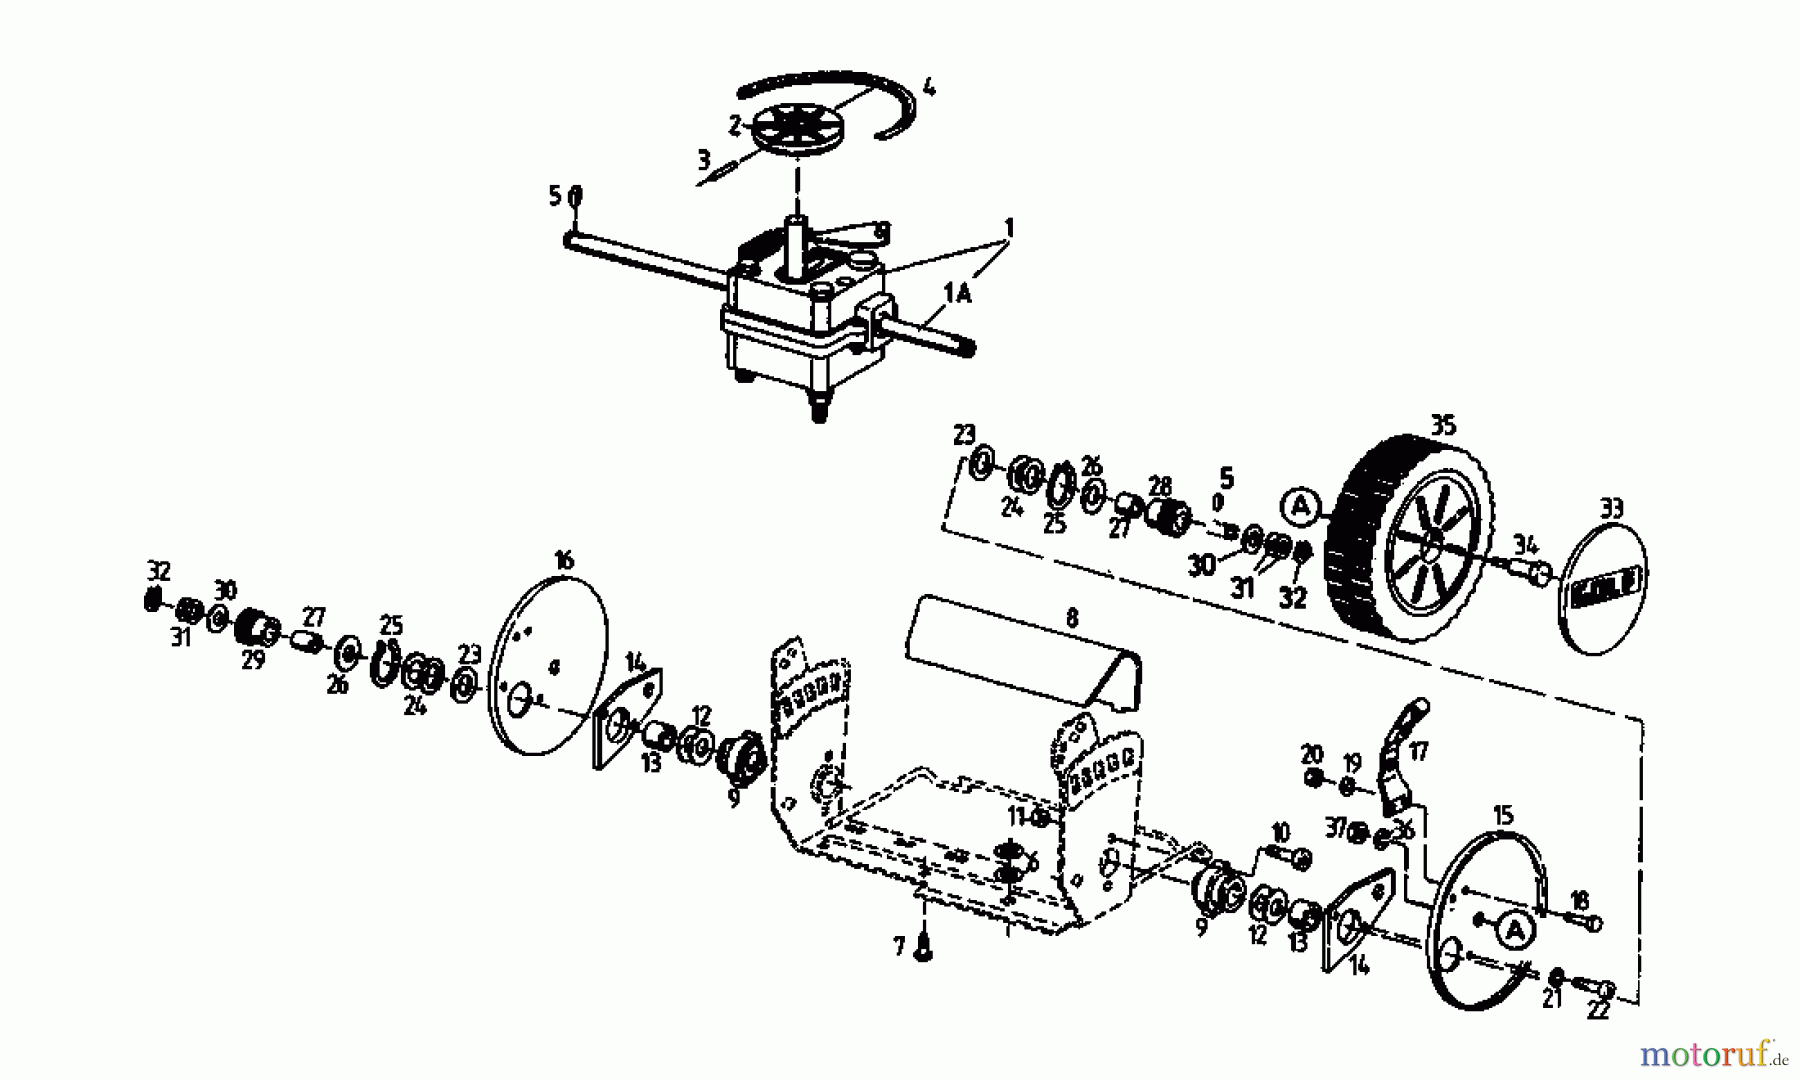  Golf Petrol mower self propelled BRL 04054.04  (1996) Gearbox, Wheels, Cutting hight adjustment